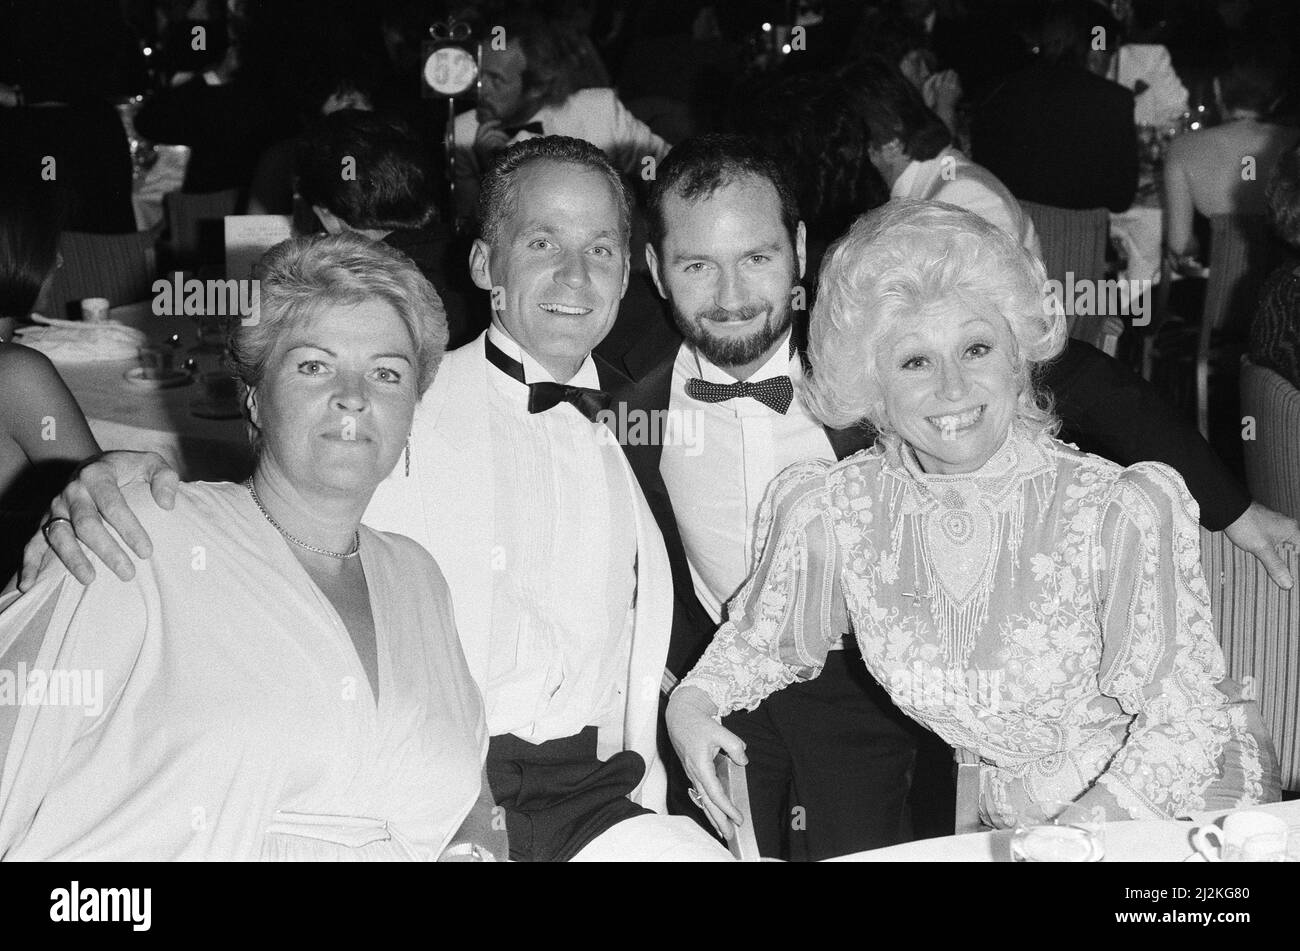 Mirror British Music Video Awards, Londra, martedì 6th ottobre 1987. I nostri spettacoli di foto ... (Da sinistra alla luce) Pam St Clement, Michael Cashman, Kenny Everett e Barbara Windsor. Foto Stock